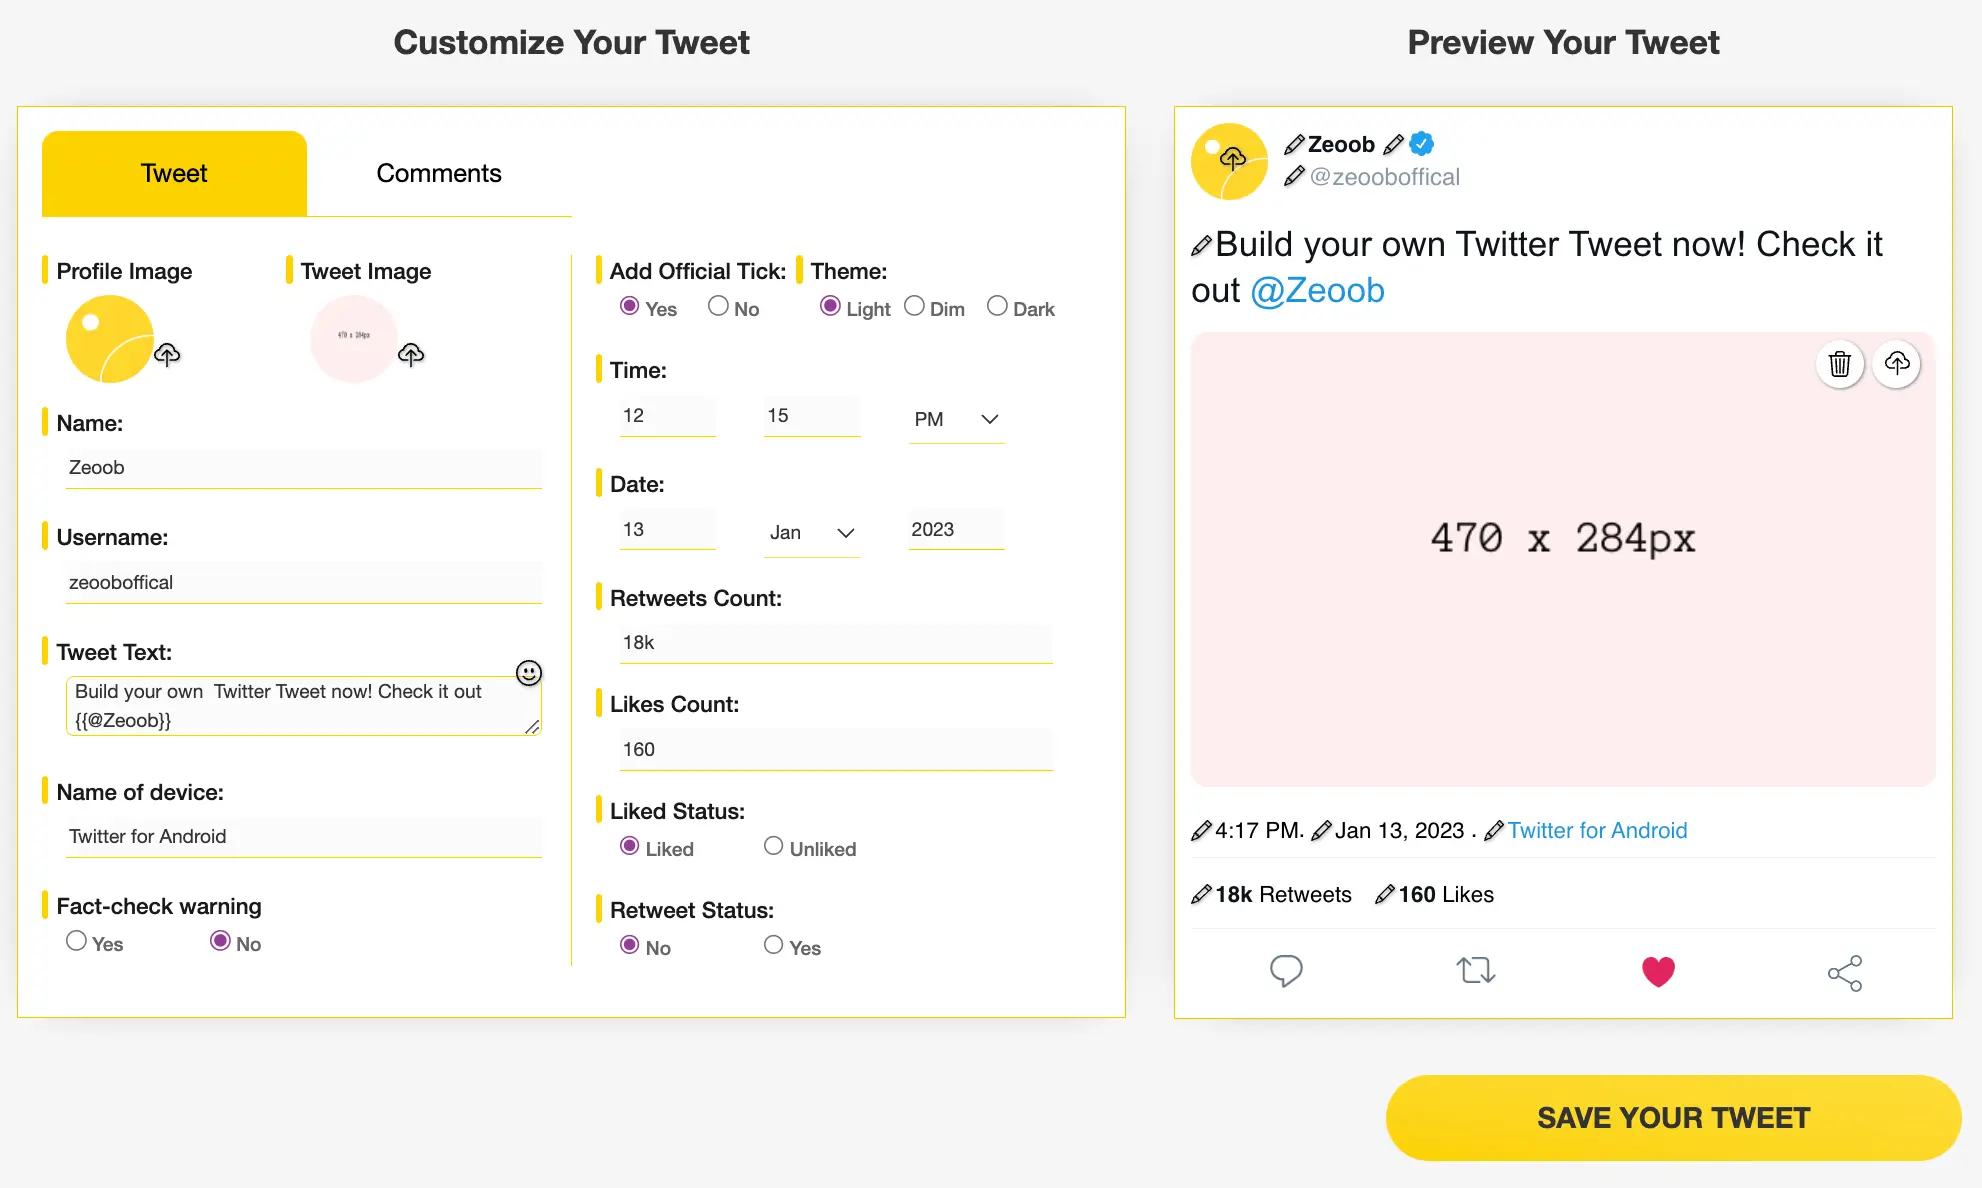 A Preview of Tweet generator tool